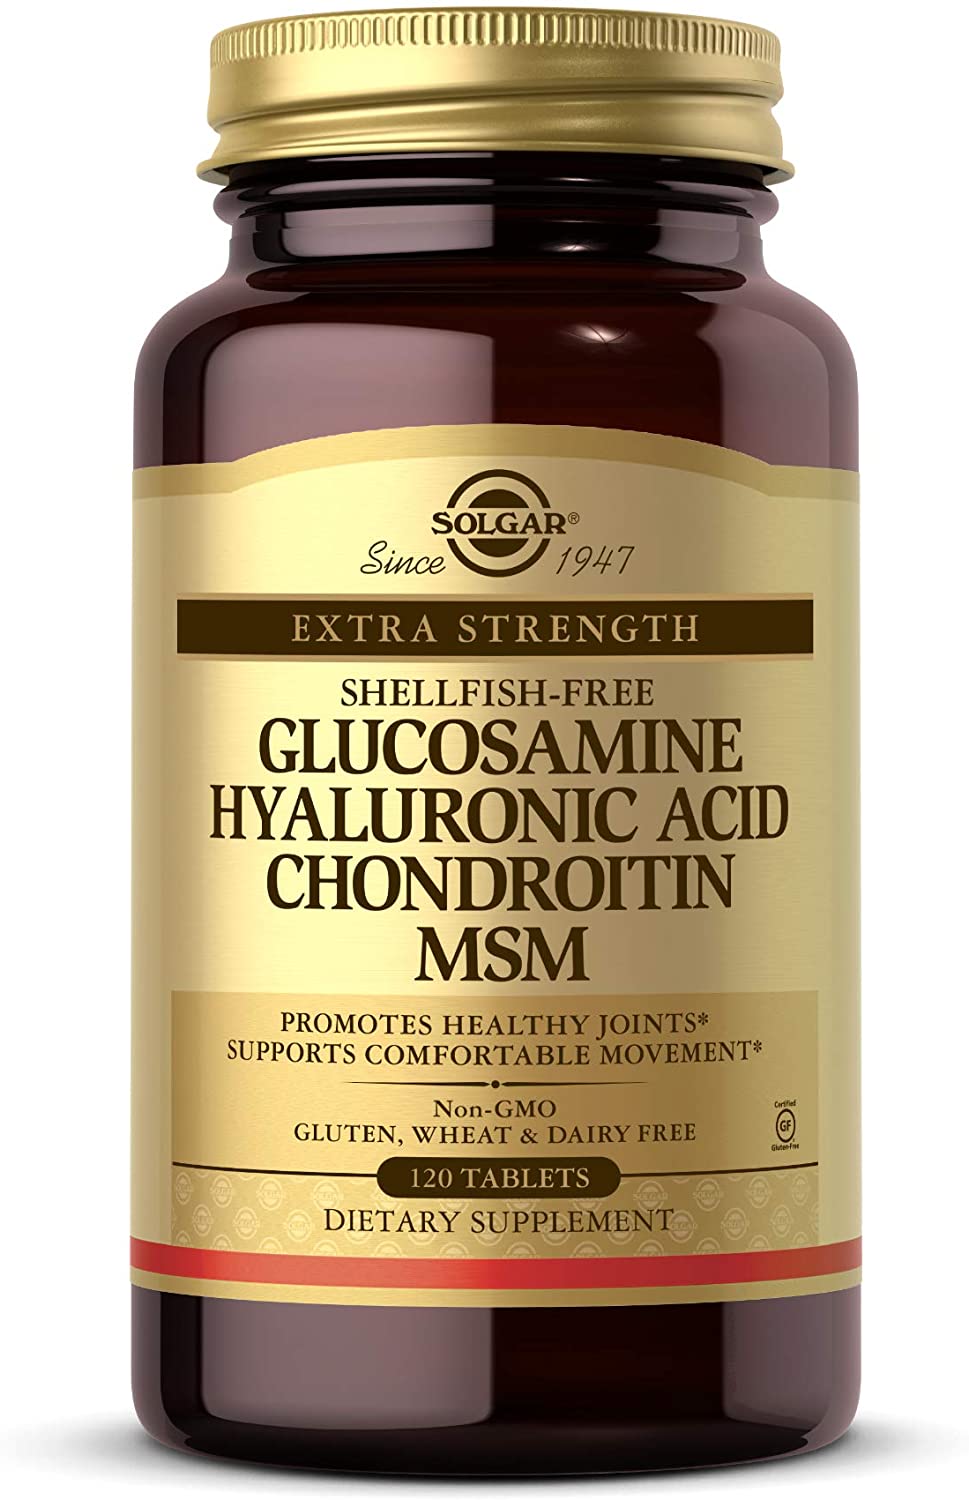 Solgar Glucosamine Hyaluronic Acid Chondroitin MSM, 120 Tablets